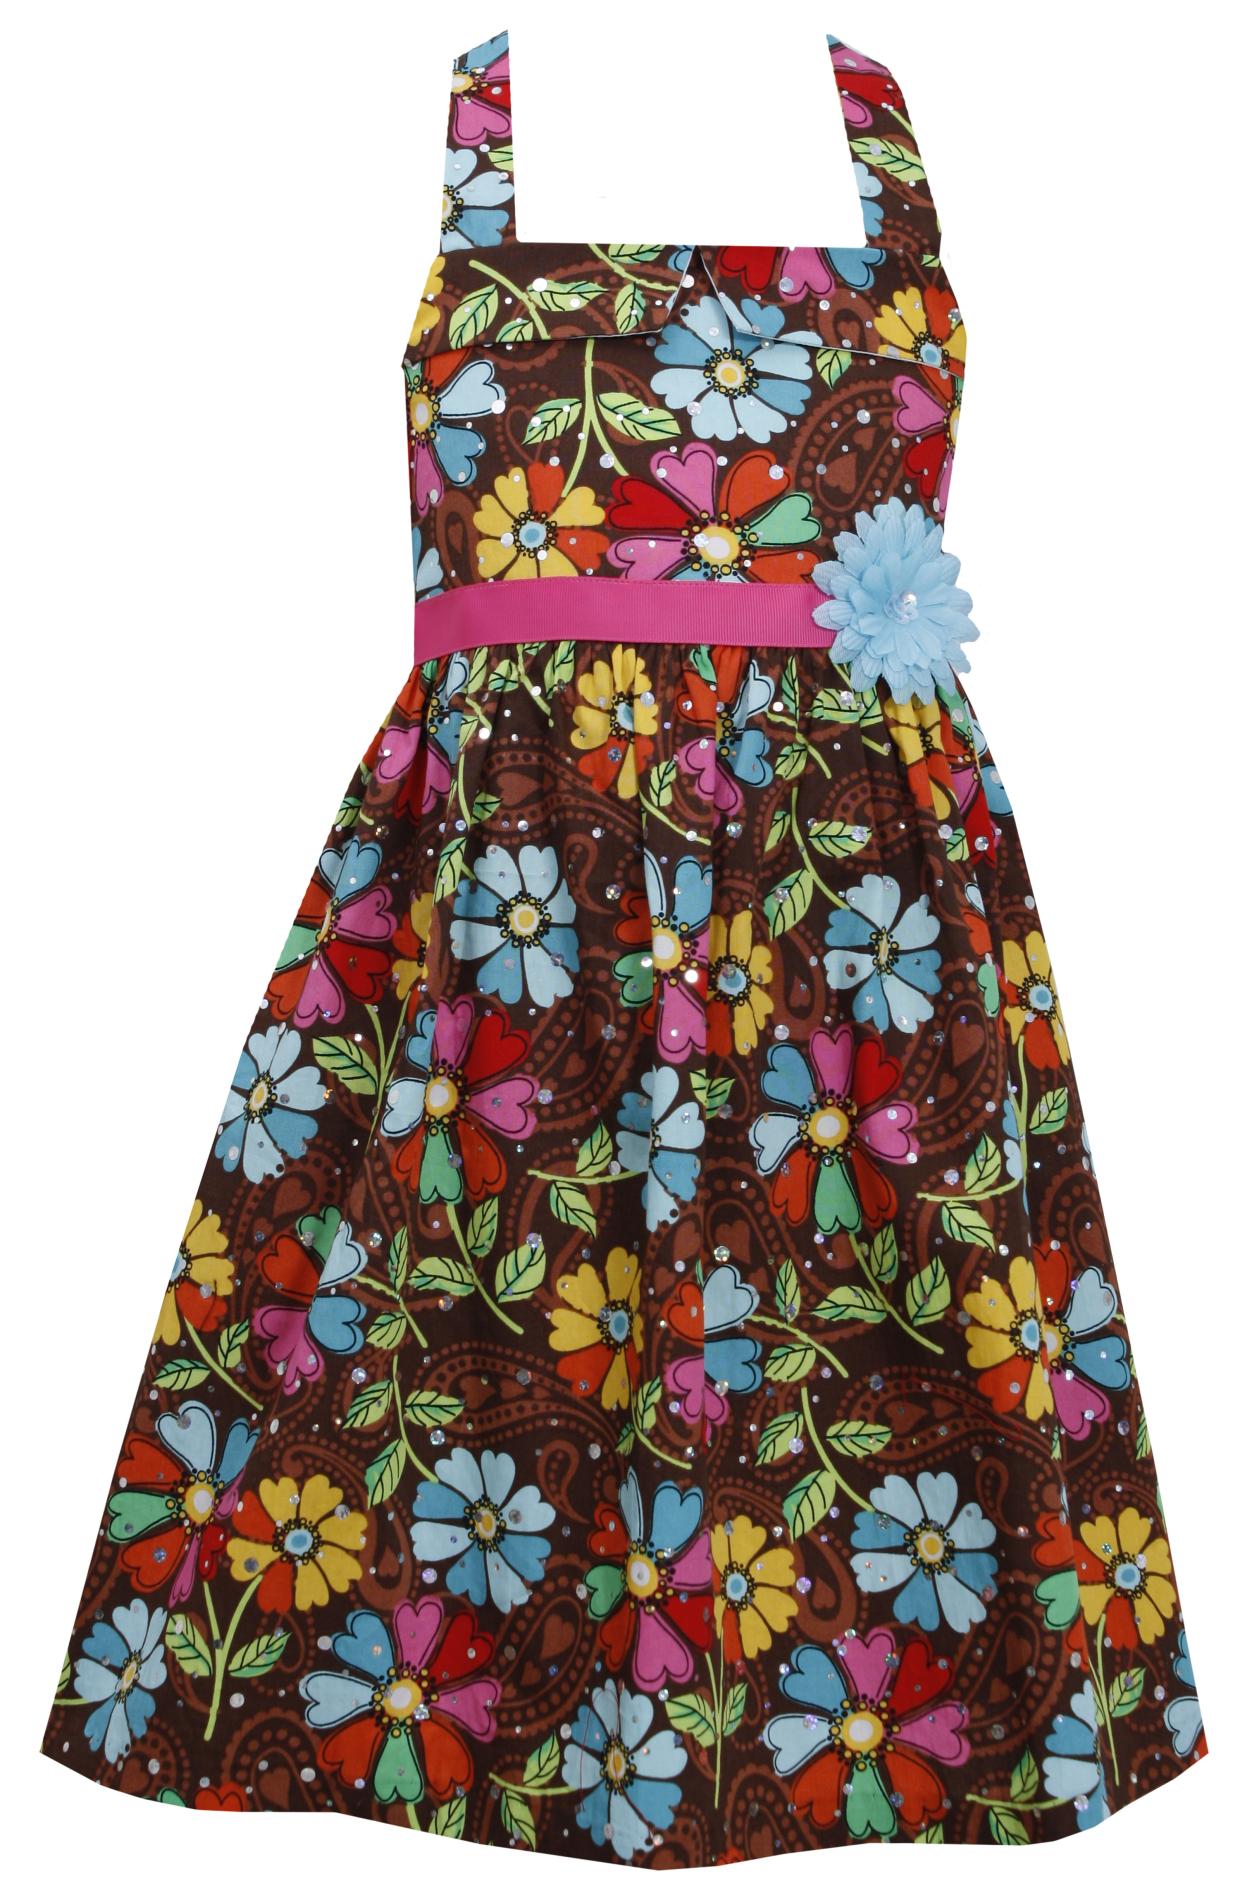 Ashley Ann Girl's Sleeveless Dress - Floral Print